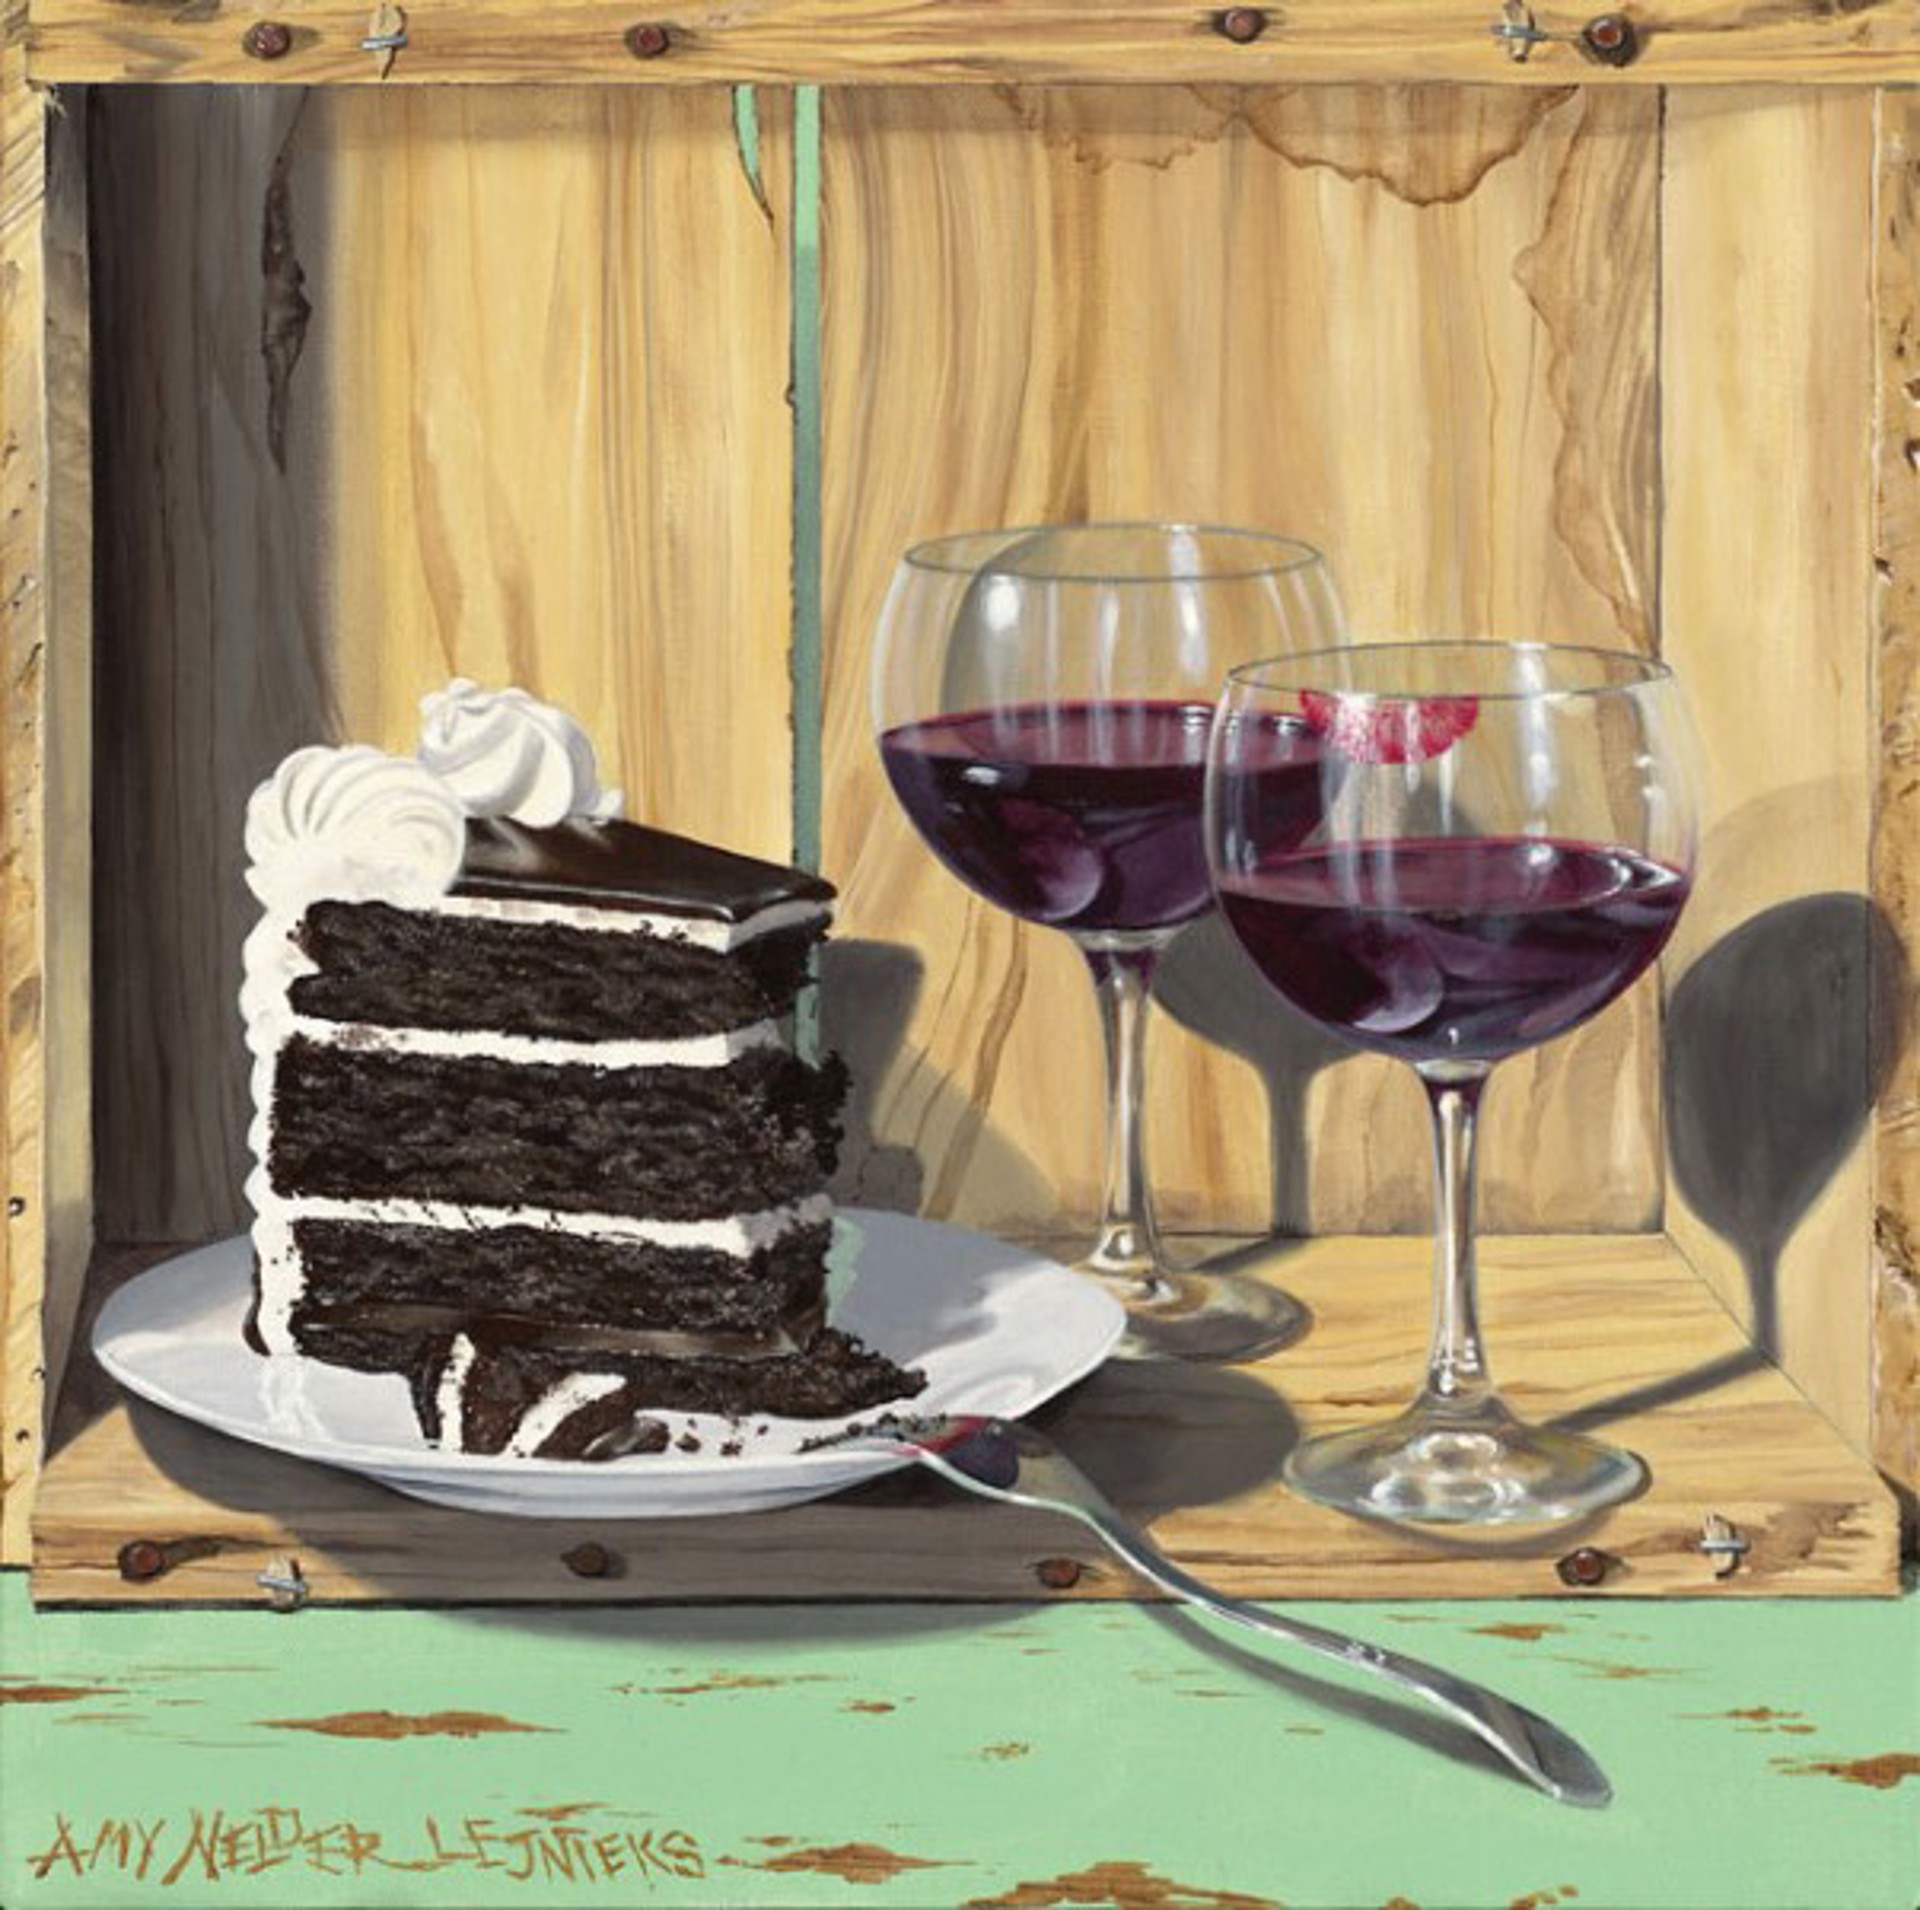 Cake Interrupted by Amy Nelder